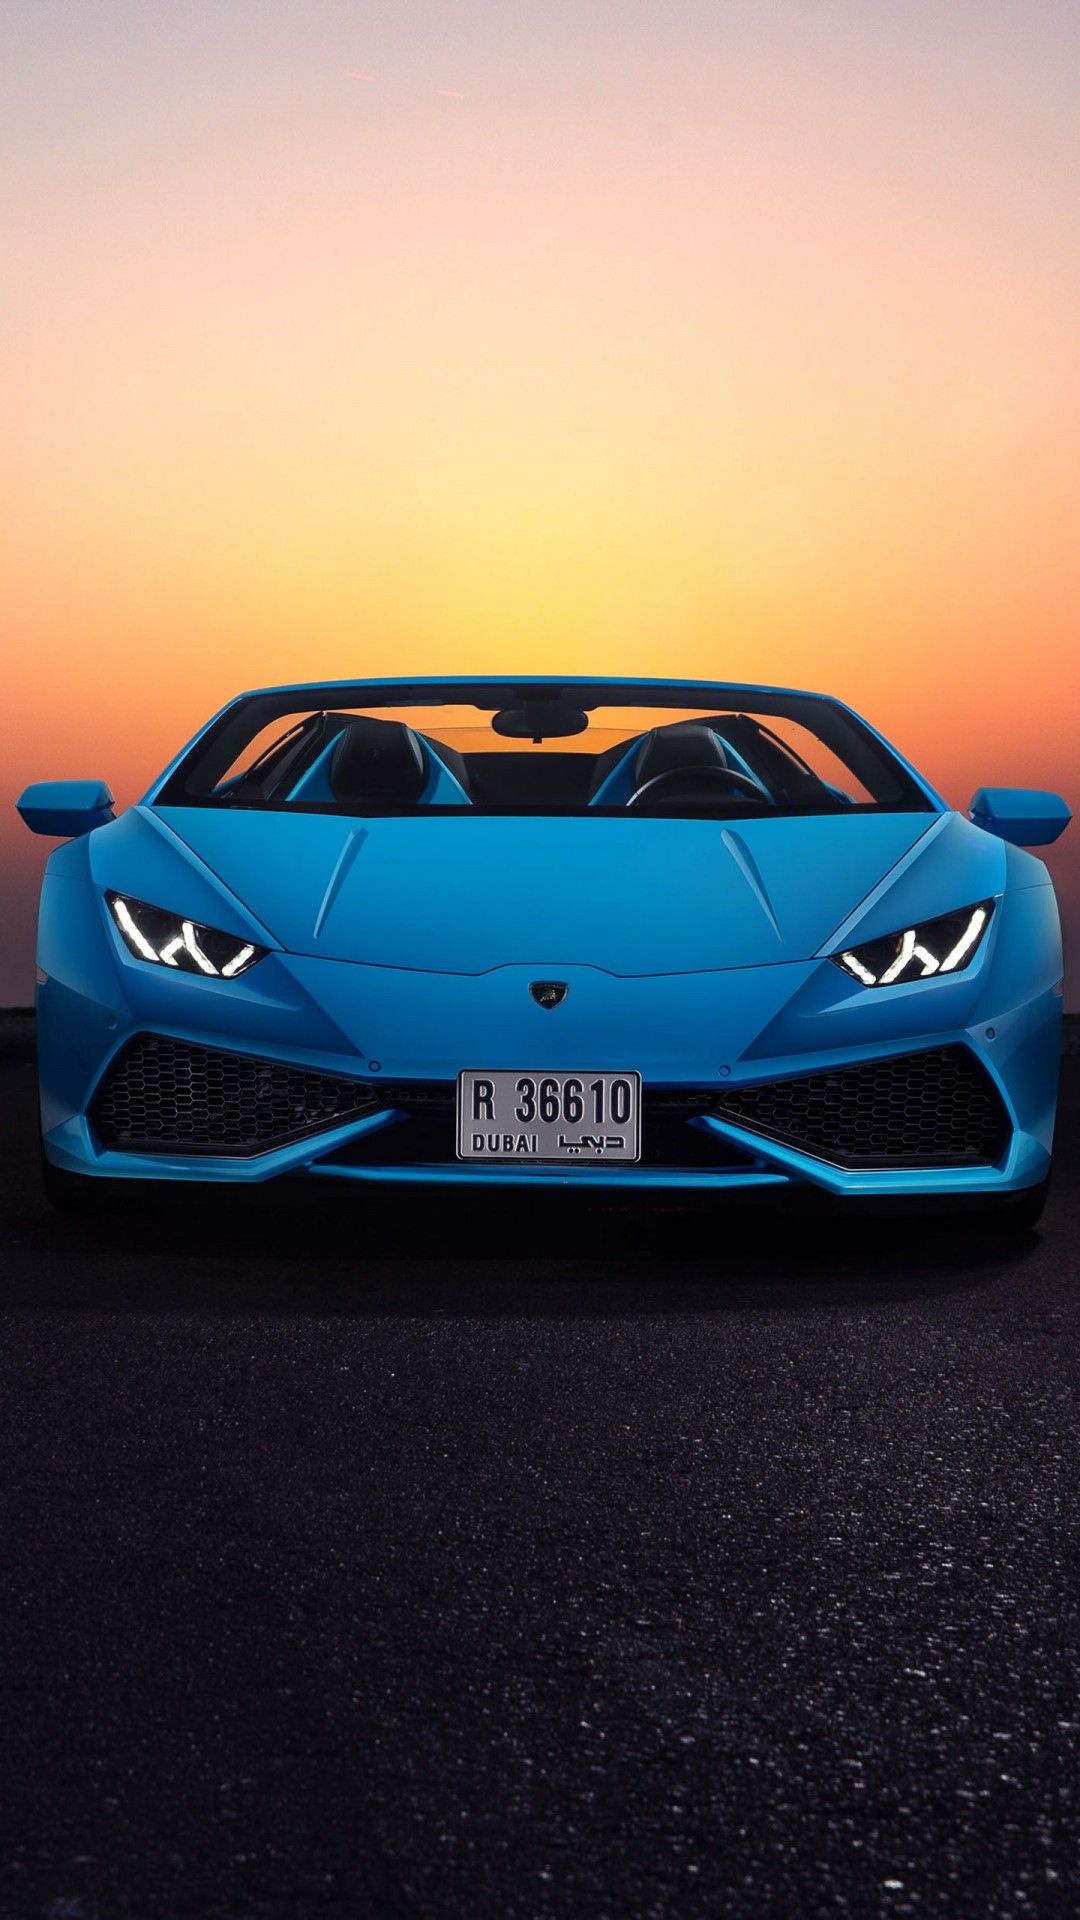 Lamborghini iPhone wallpapers, 4K HD resolution, Sleek Lamborghini images, Premium iPhone backgrounds, 1080x1920 Full HD Handy